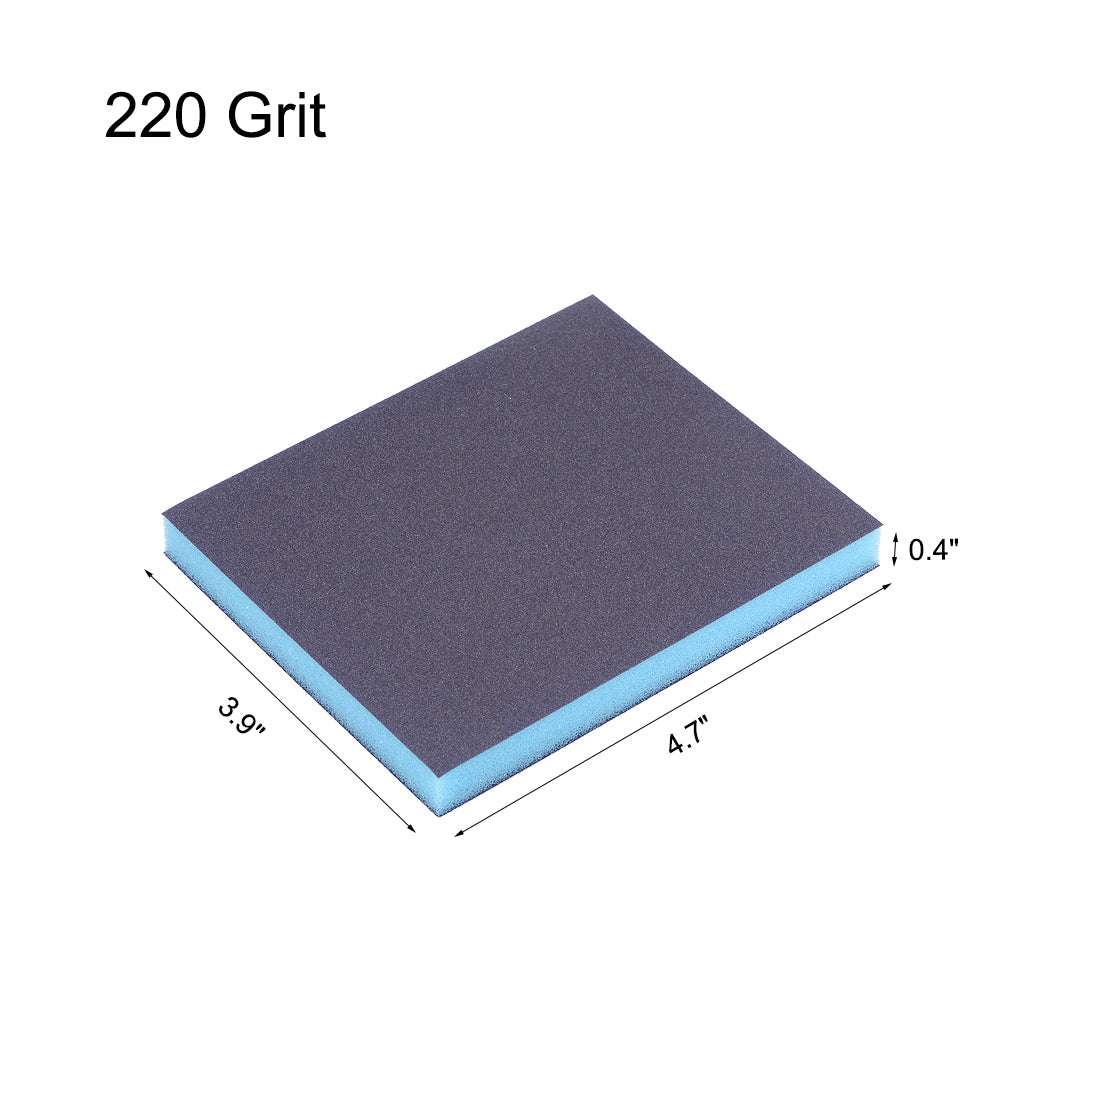 uxcell Uxcell Sanding Sponge 220 Grit Sanding Block Pad 4.7inch x 3.9inch x 0.4inch Blue 2pcs